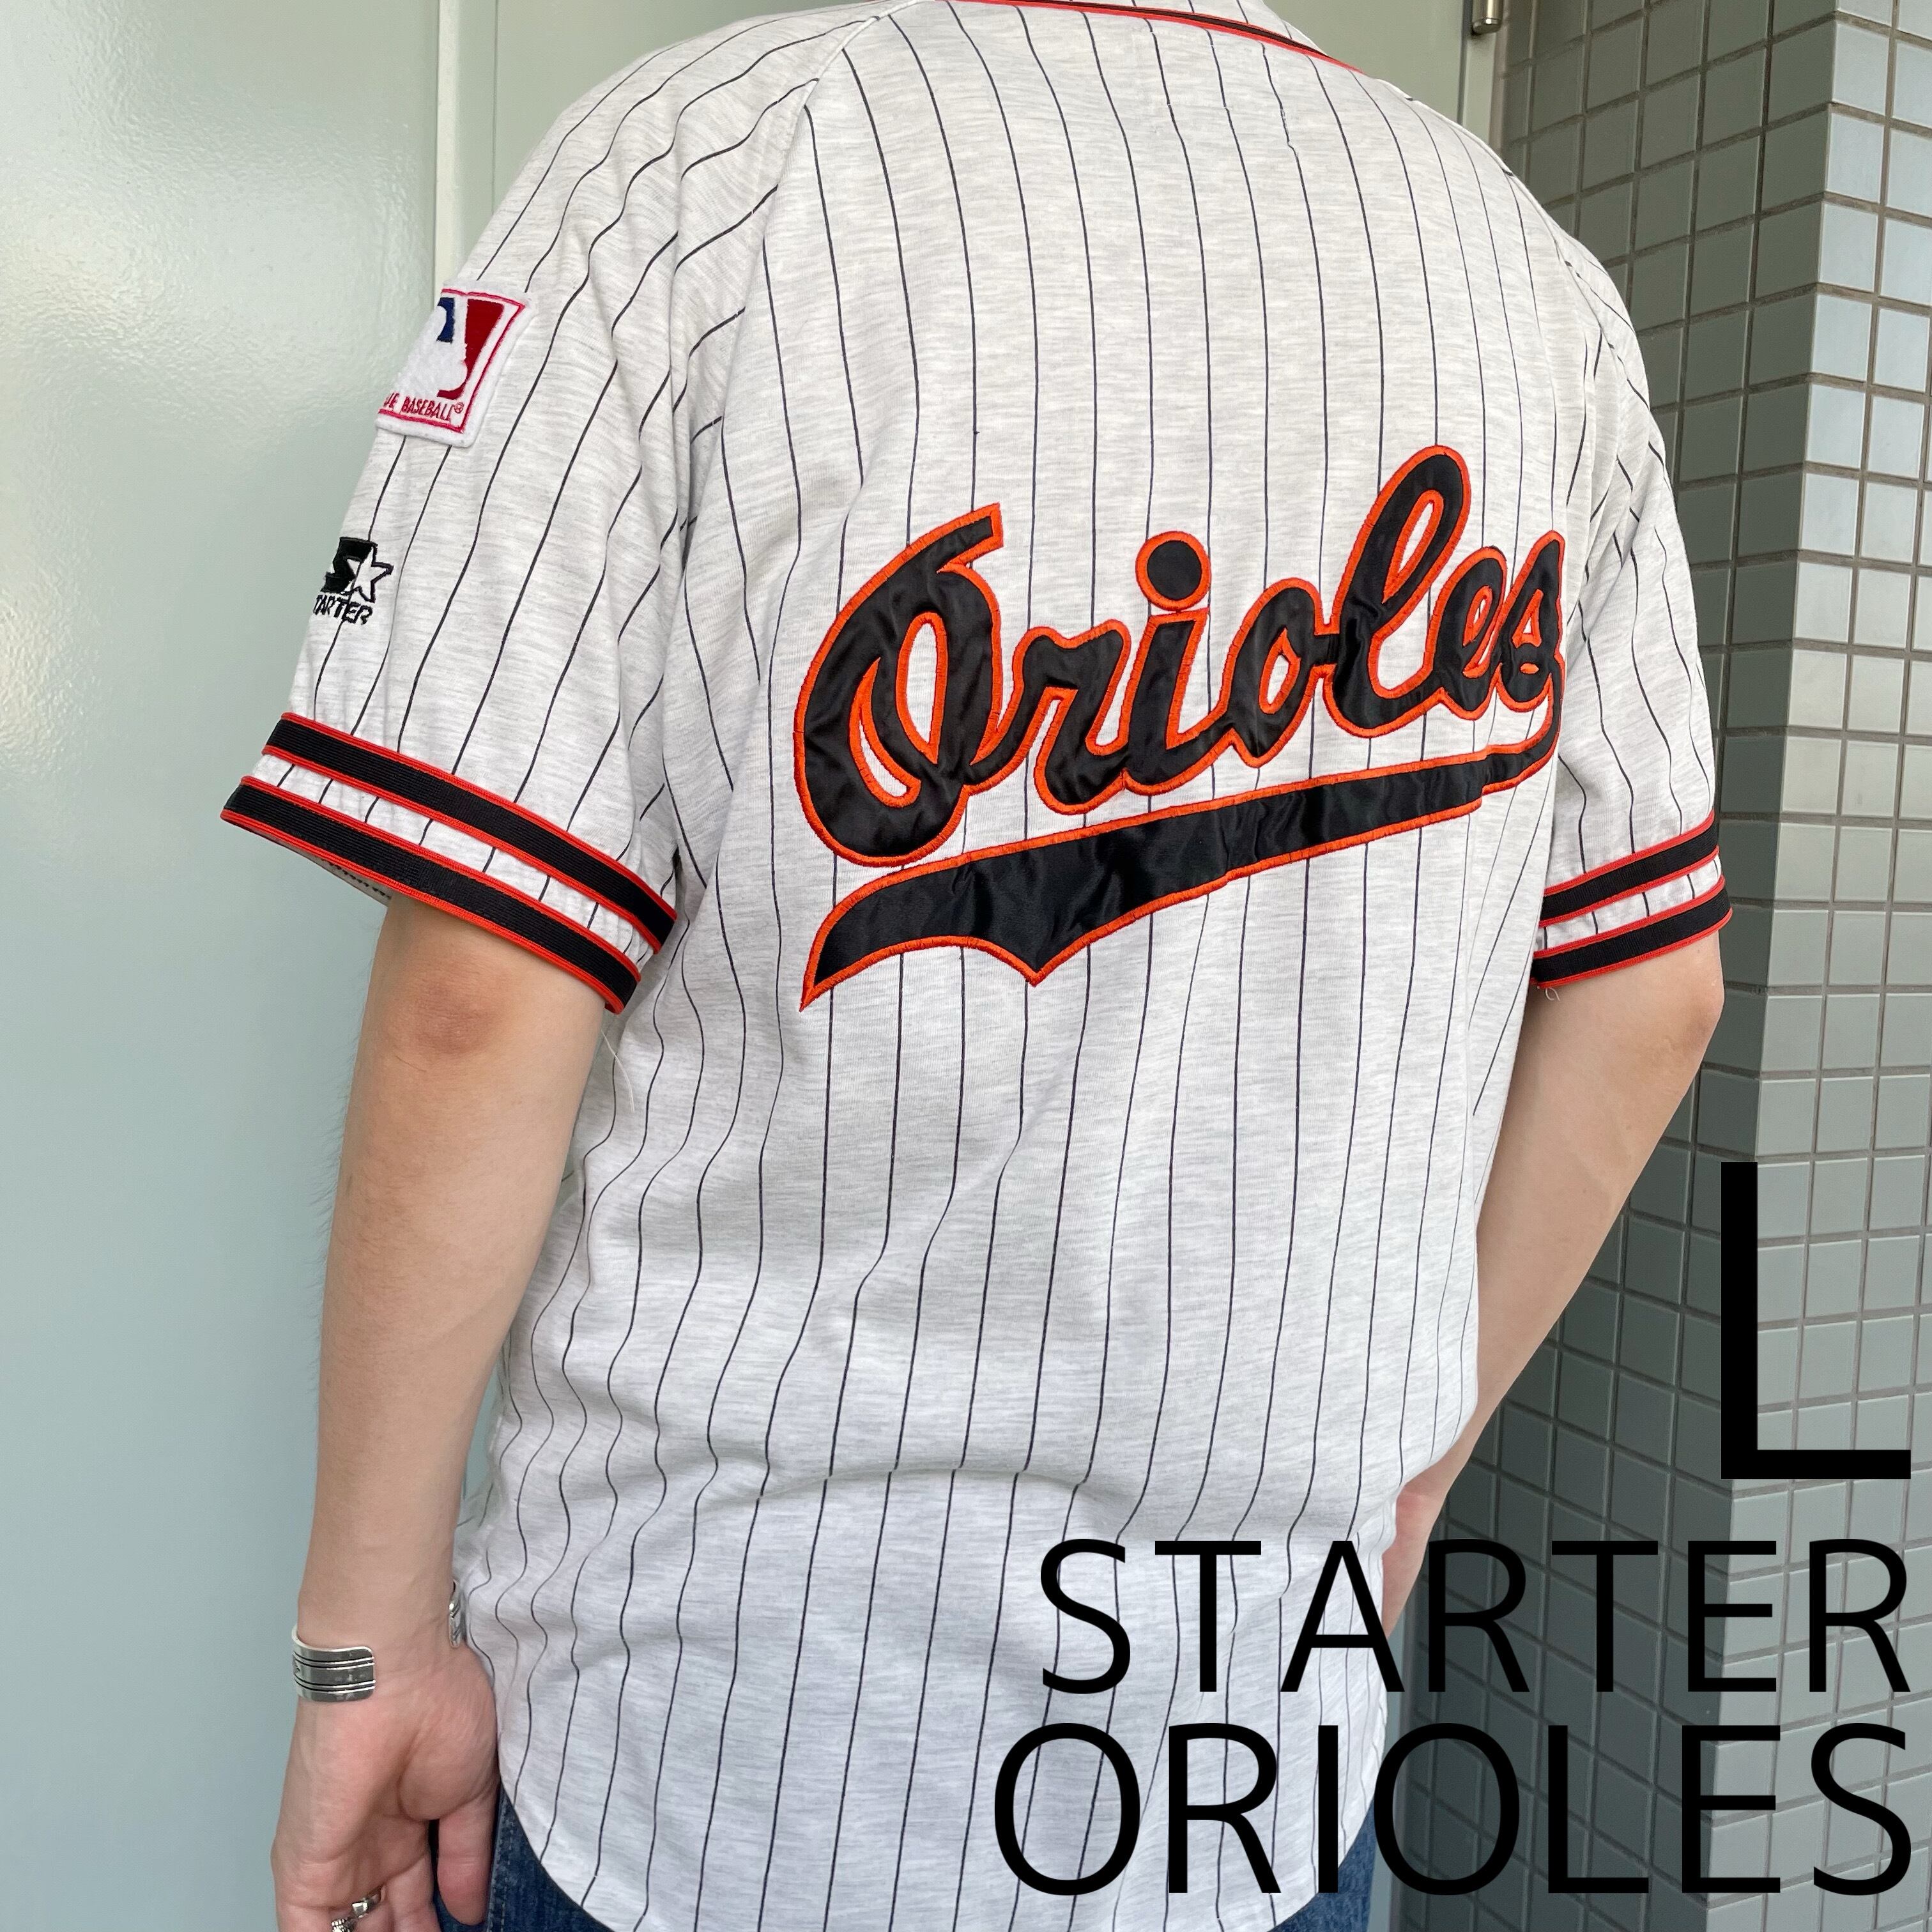 Orioles オリオールズ ユニフォーム スターター starter XL